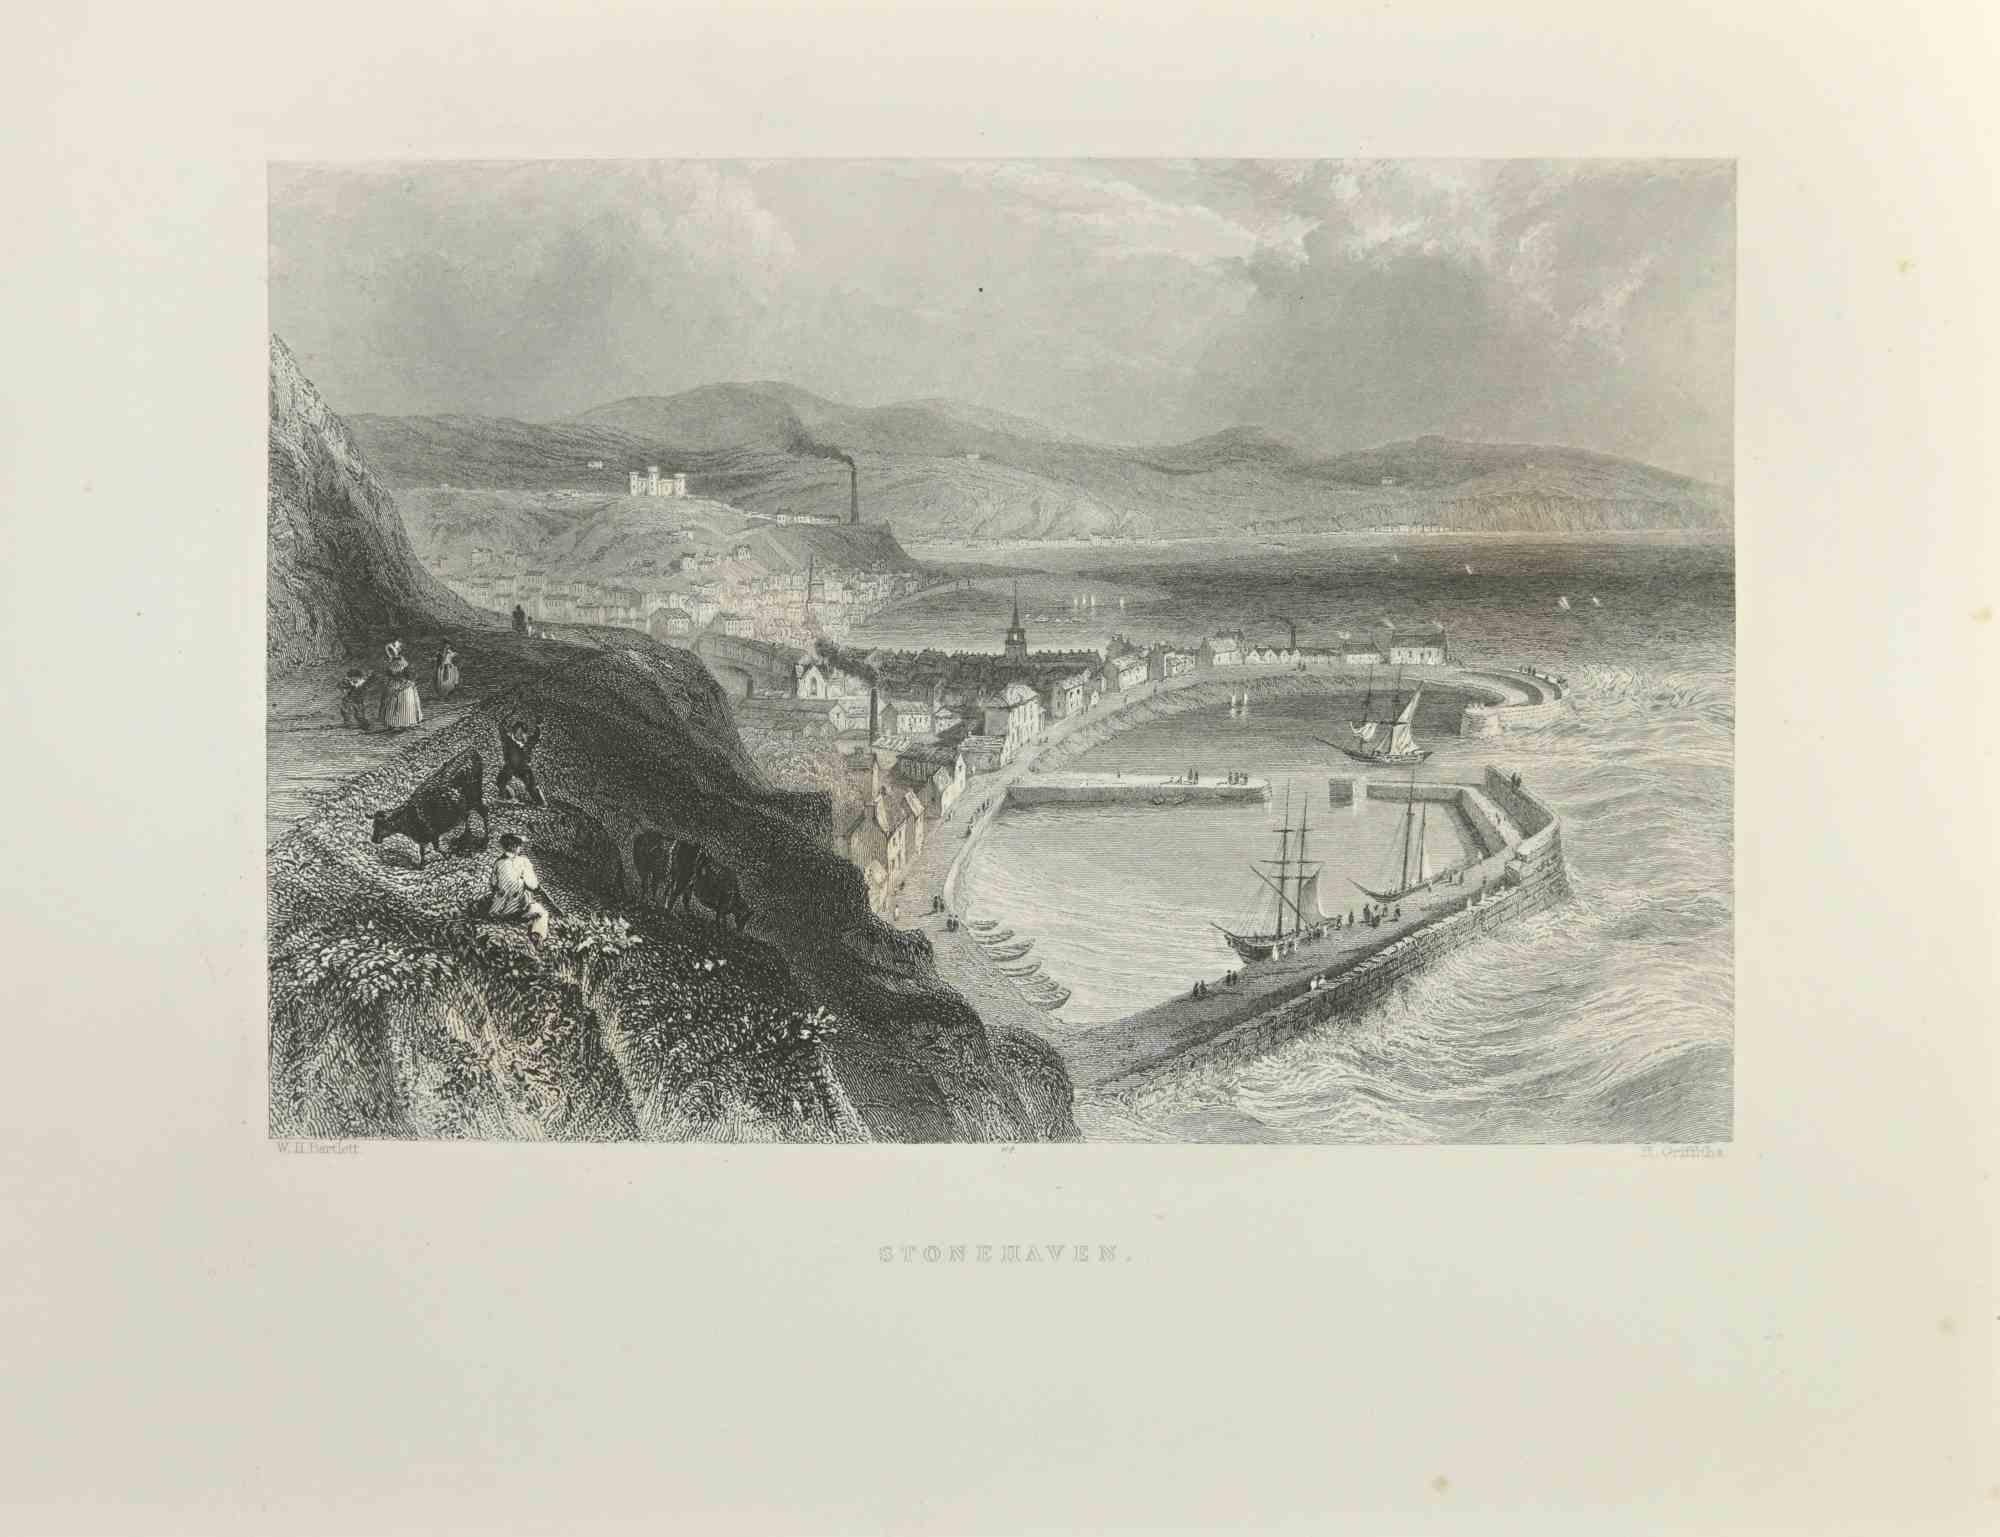 Stonehaven - Gravure par W.H. Bartlett - 1845